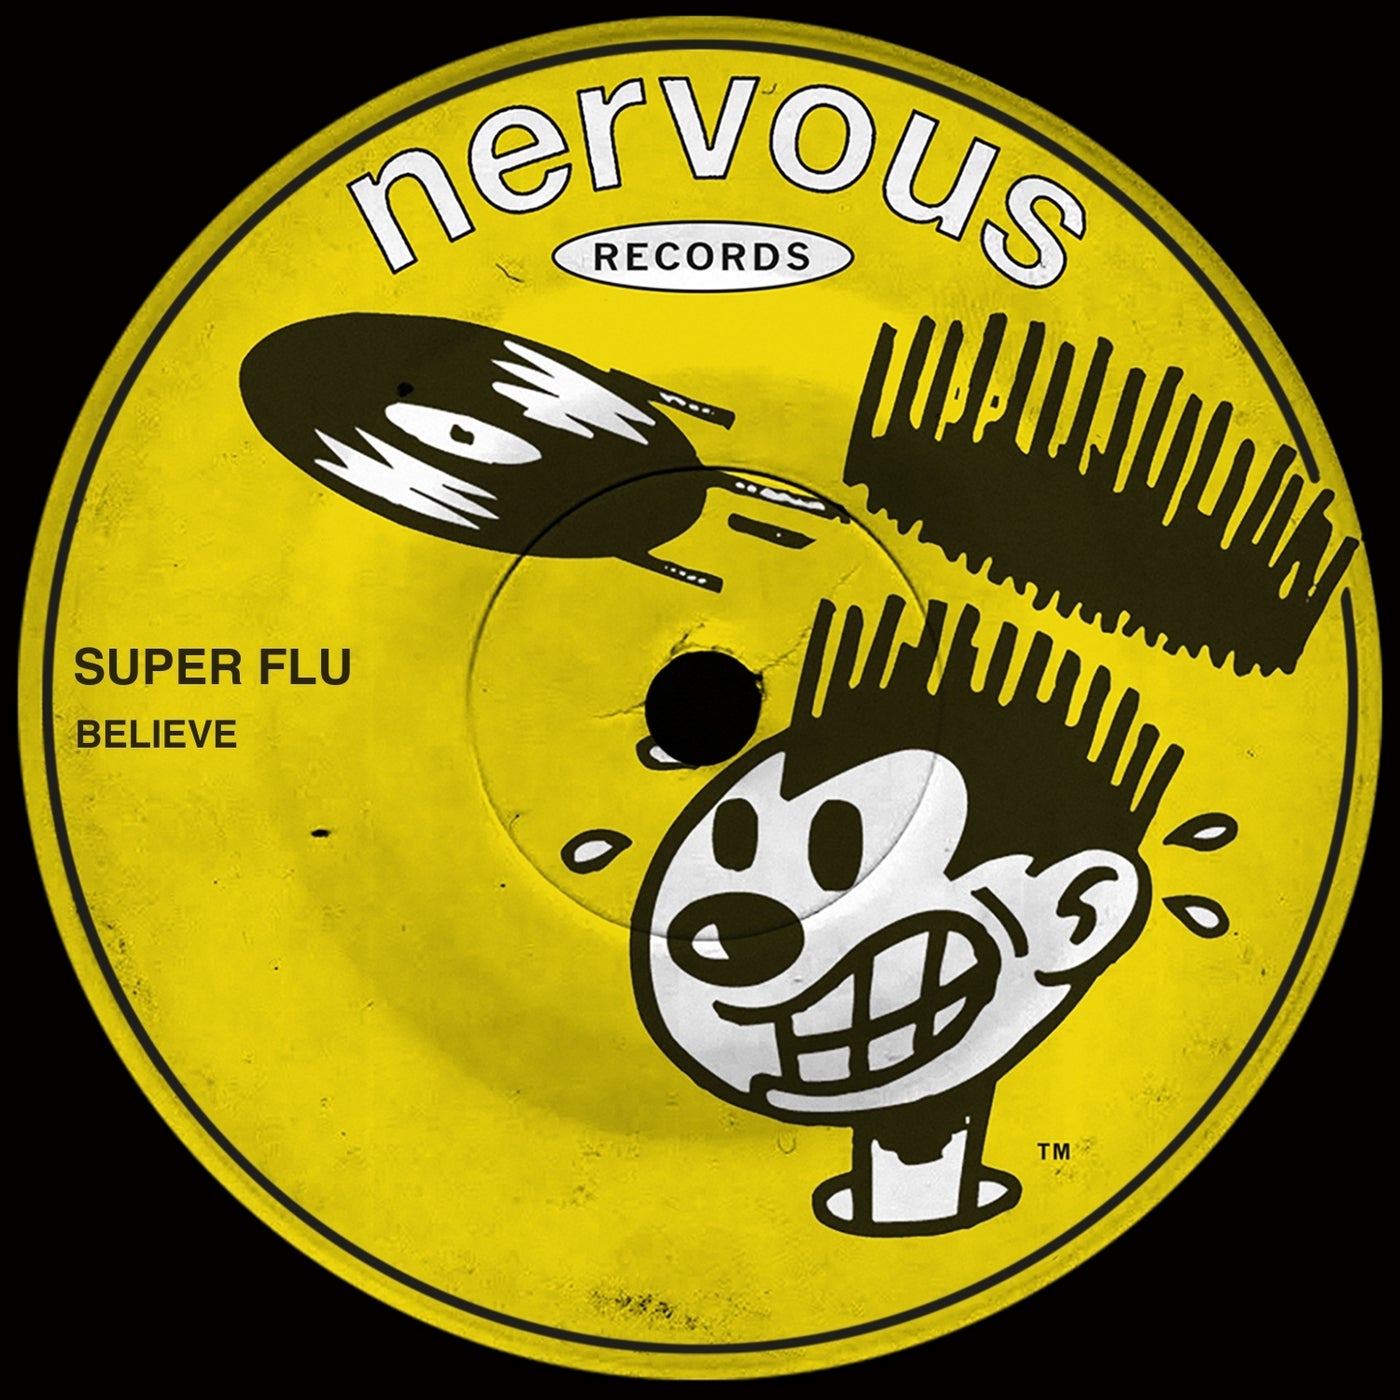 image cover: Super Flu - Believe on Nervous Records